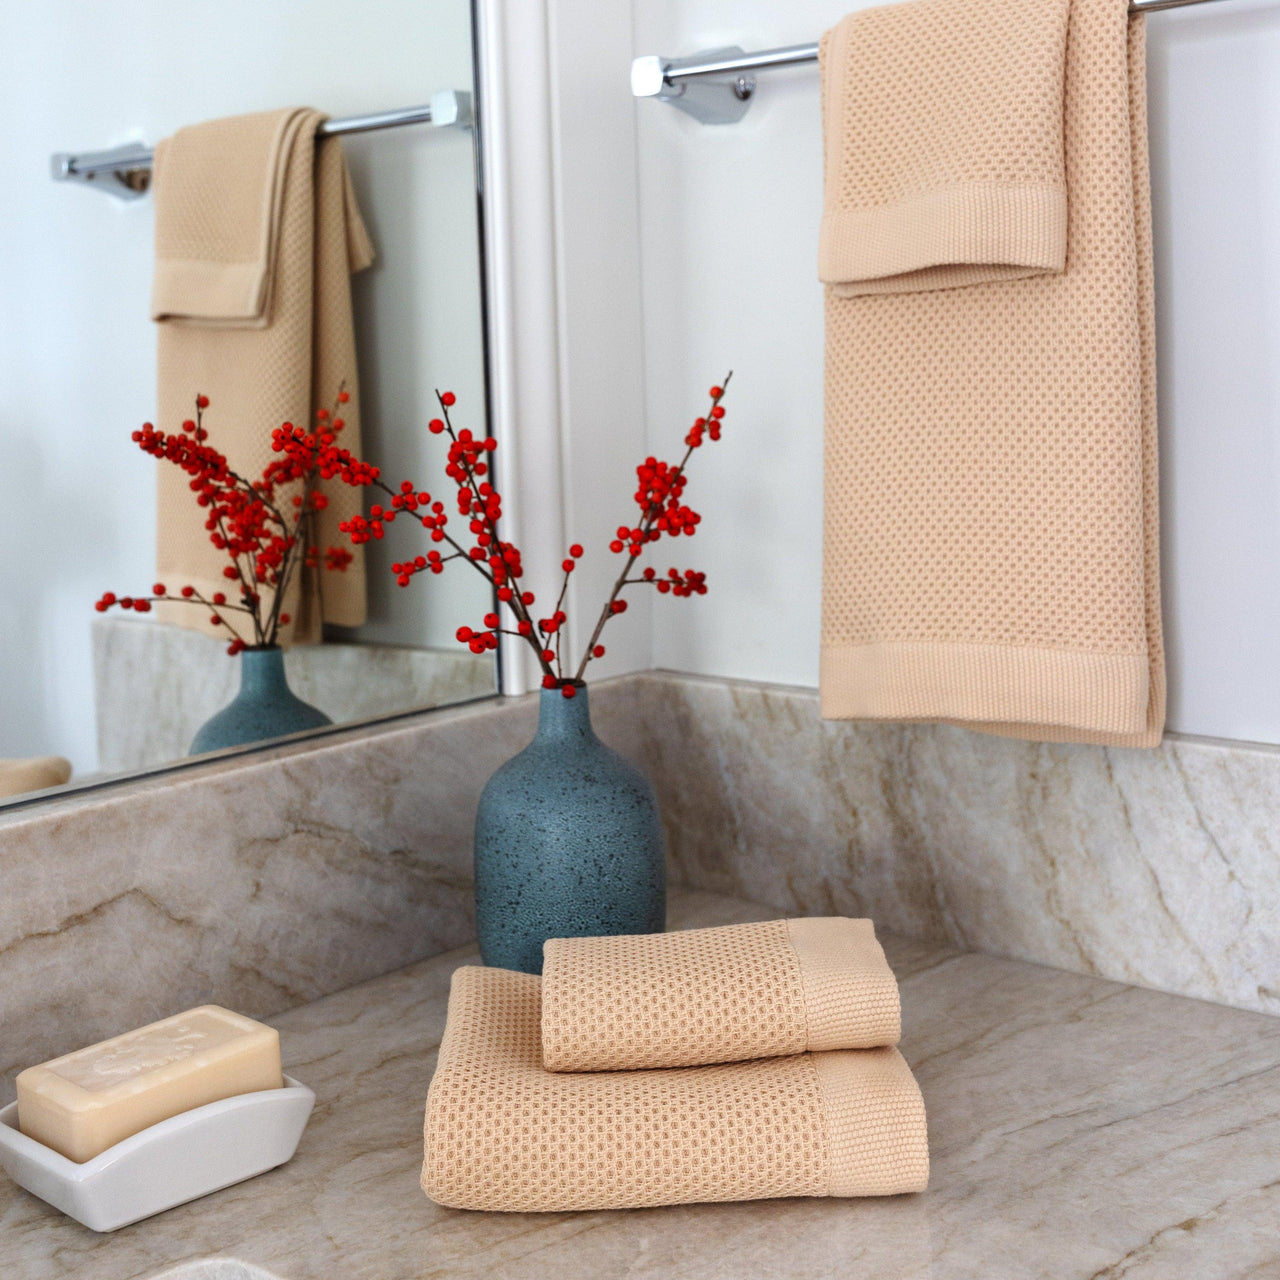 510 DESIGN Casual Turkish Cotton 6 Piece Towel Set with Aqua Finish  5DS73-0236, 1 unit - Ralphs